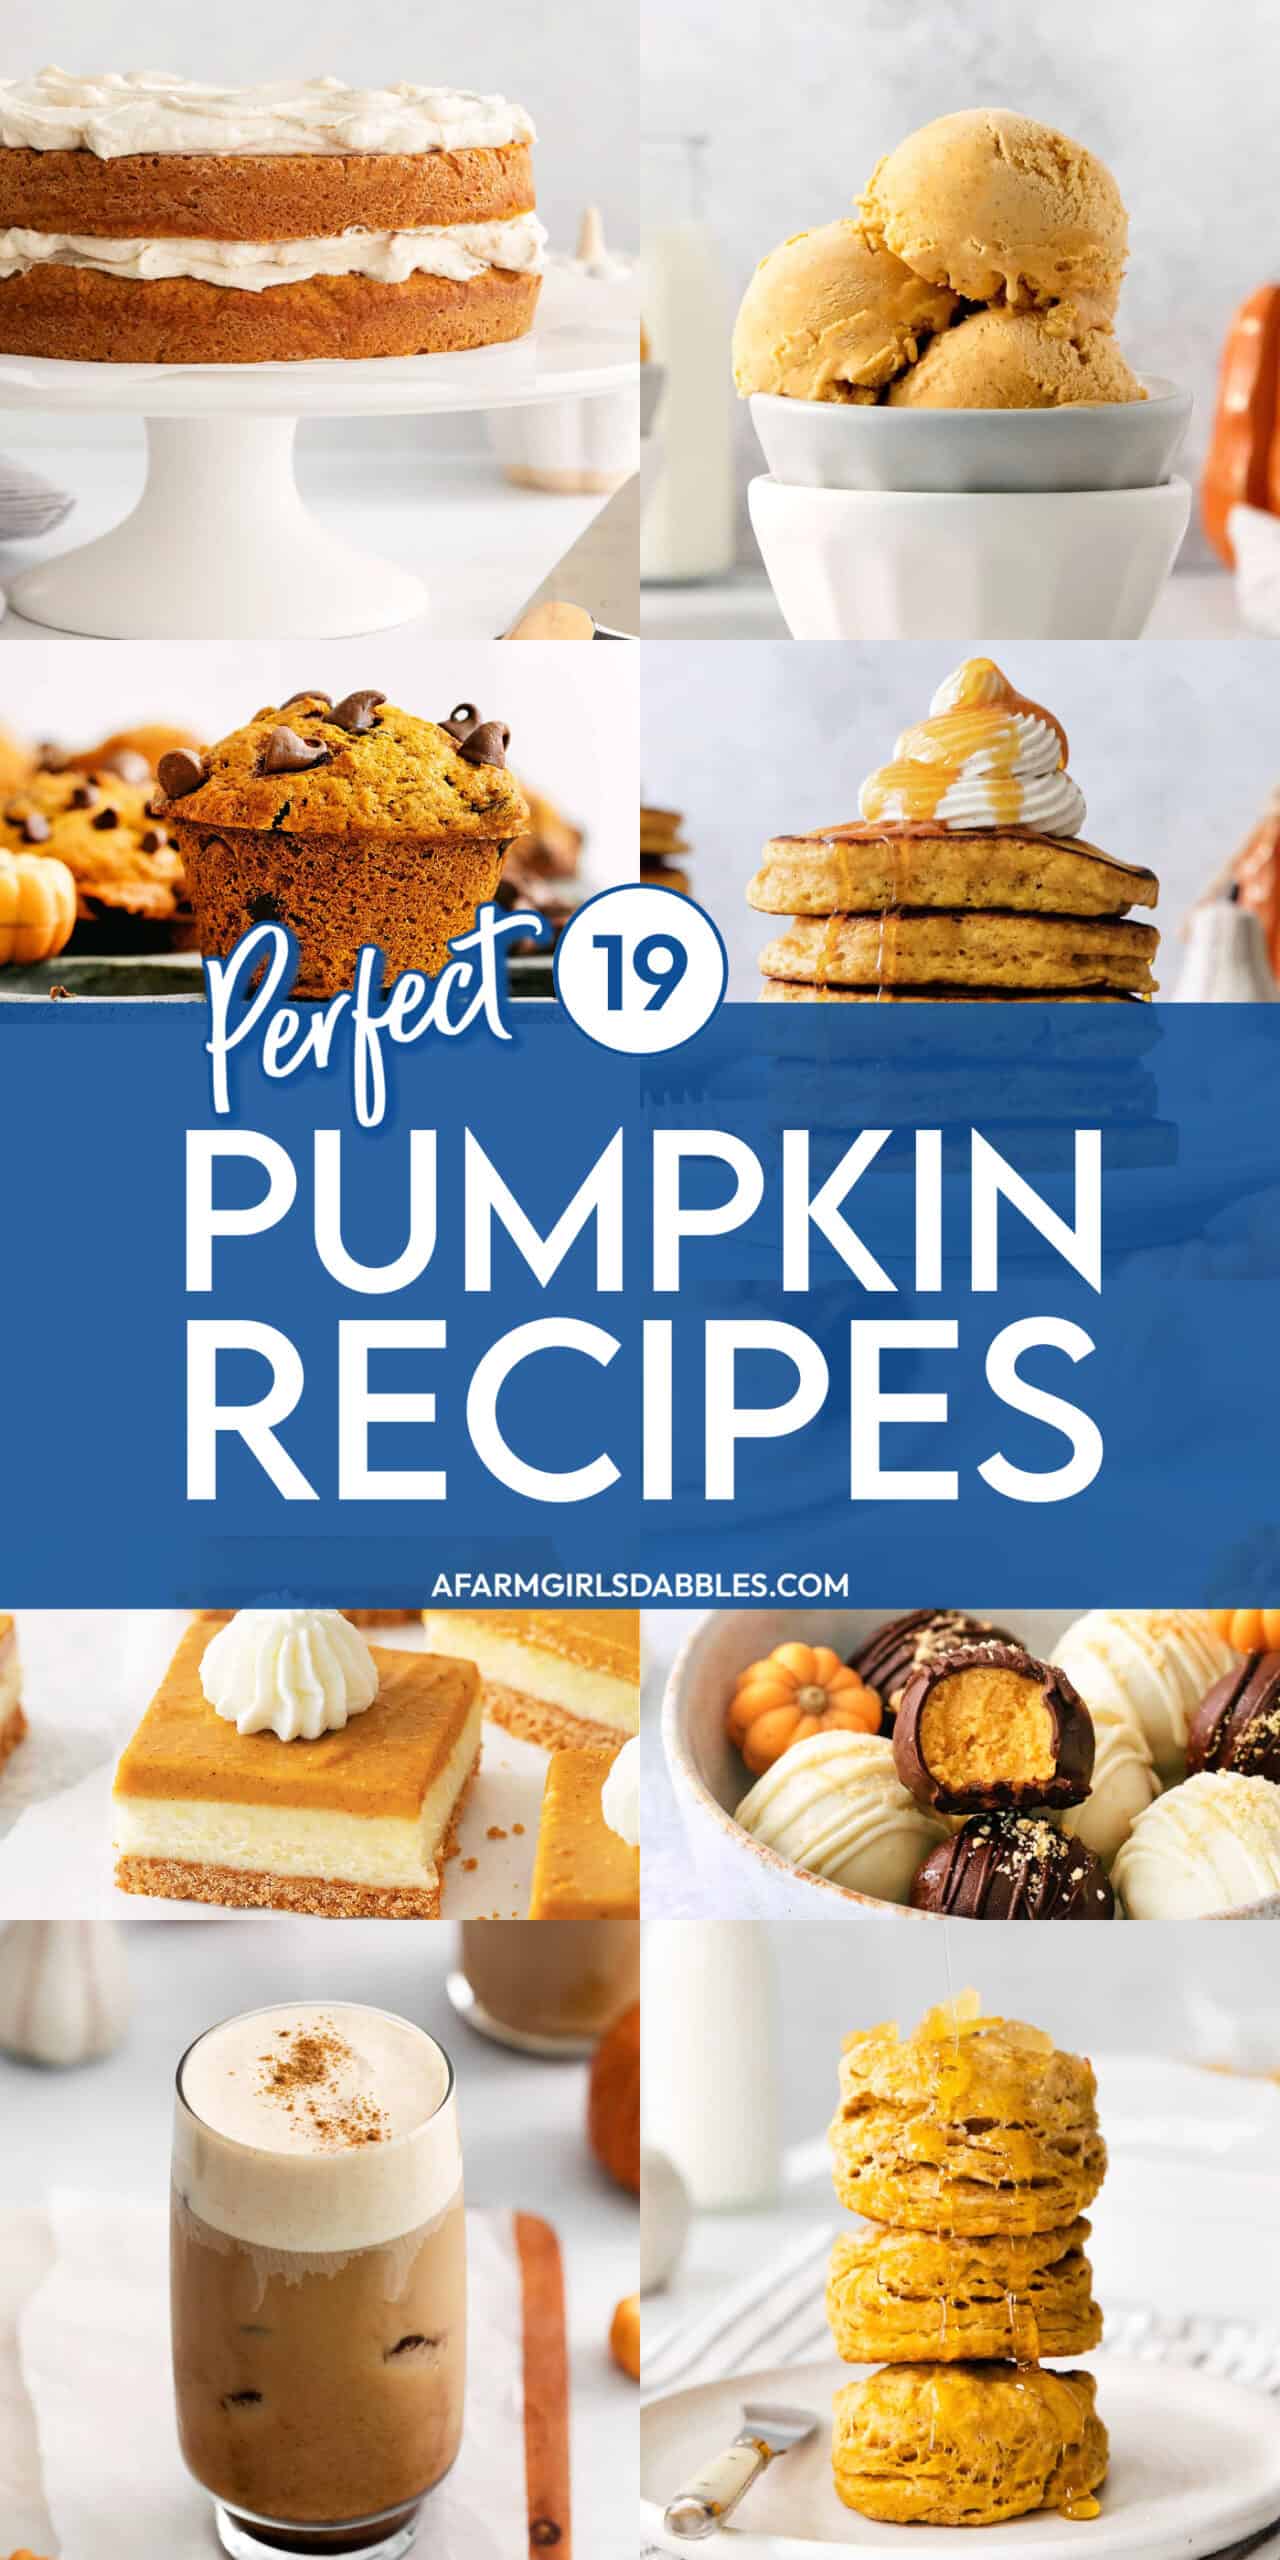 Pinterest image for 19 perfect pumpkin recipes